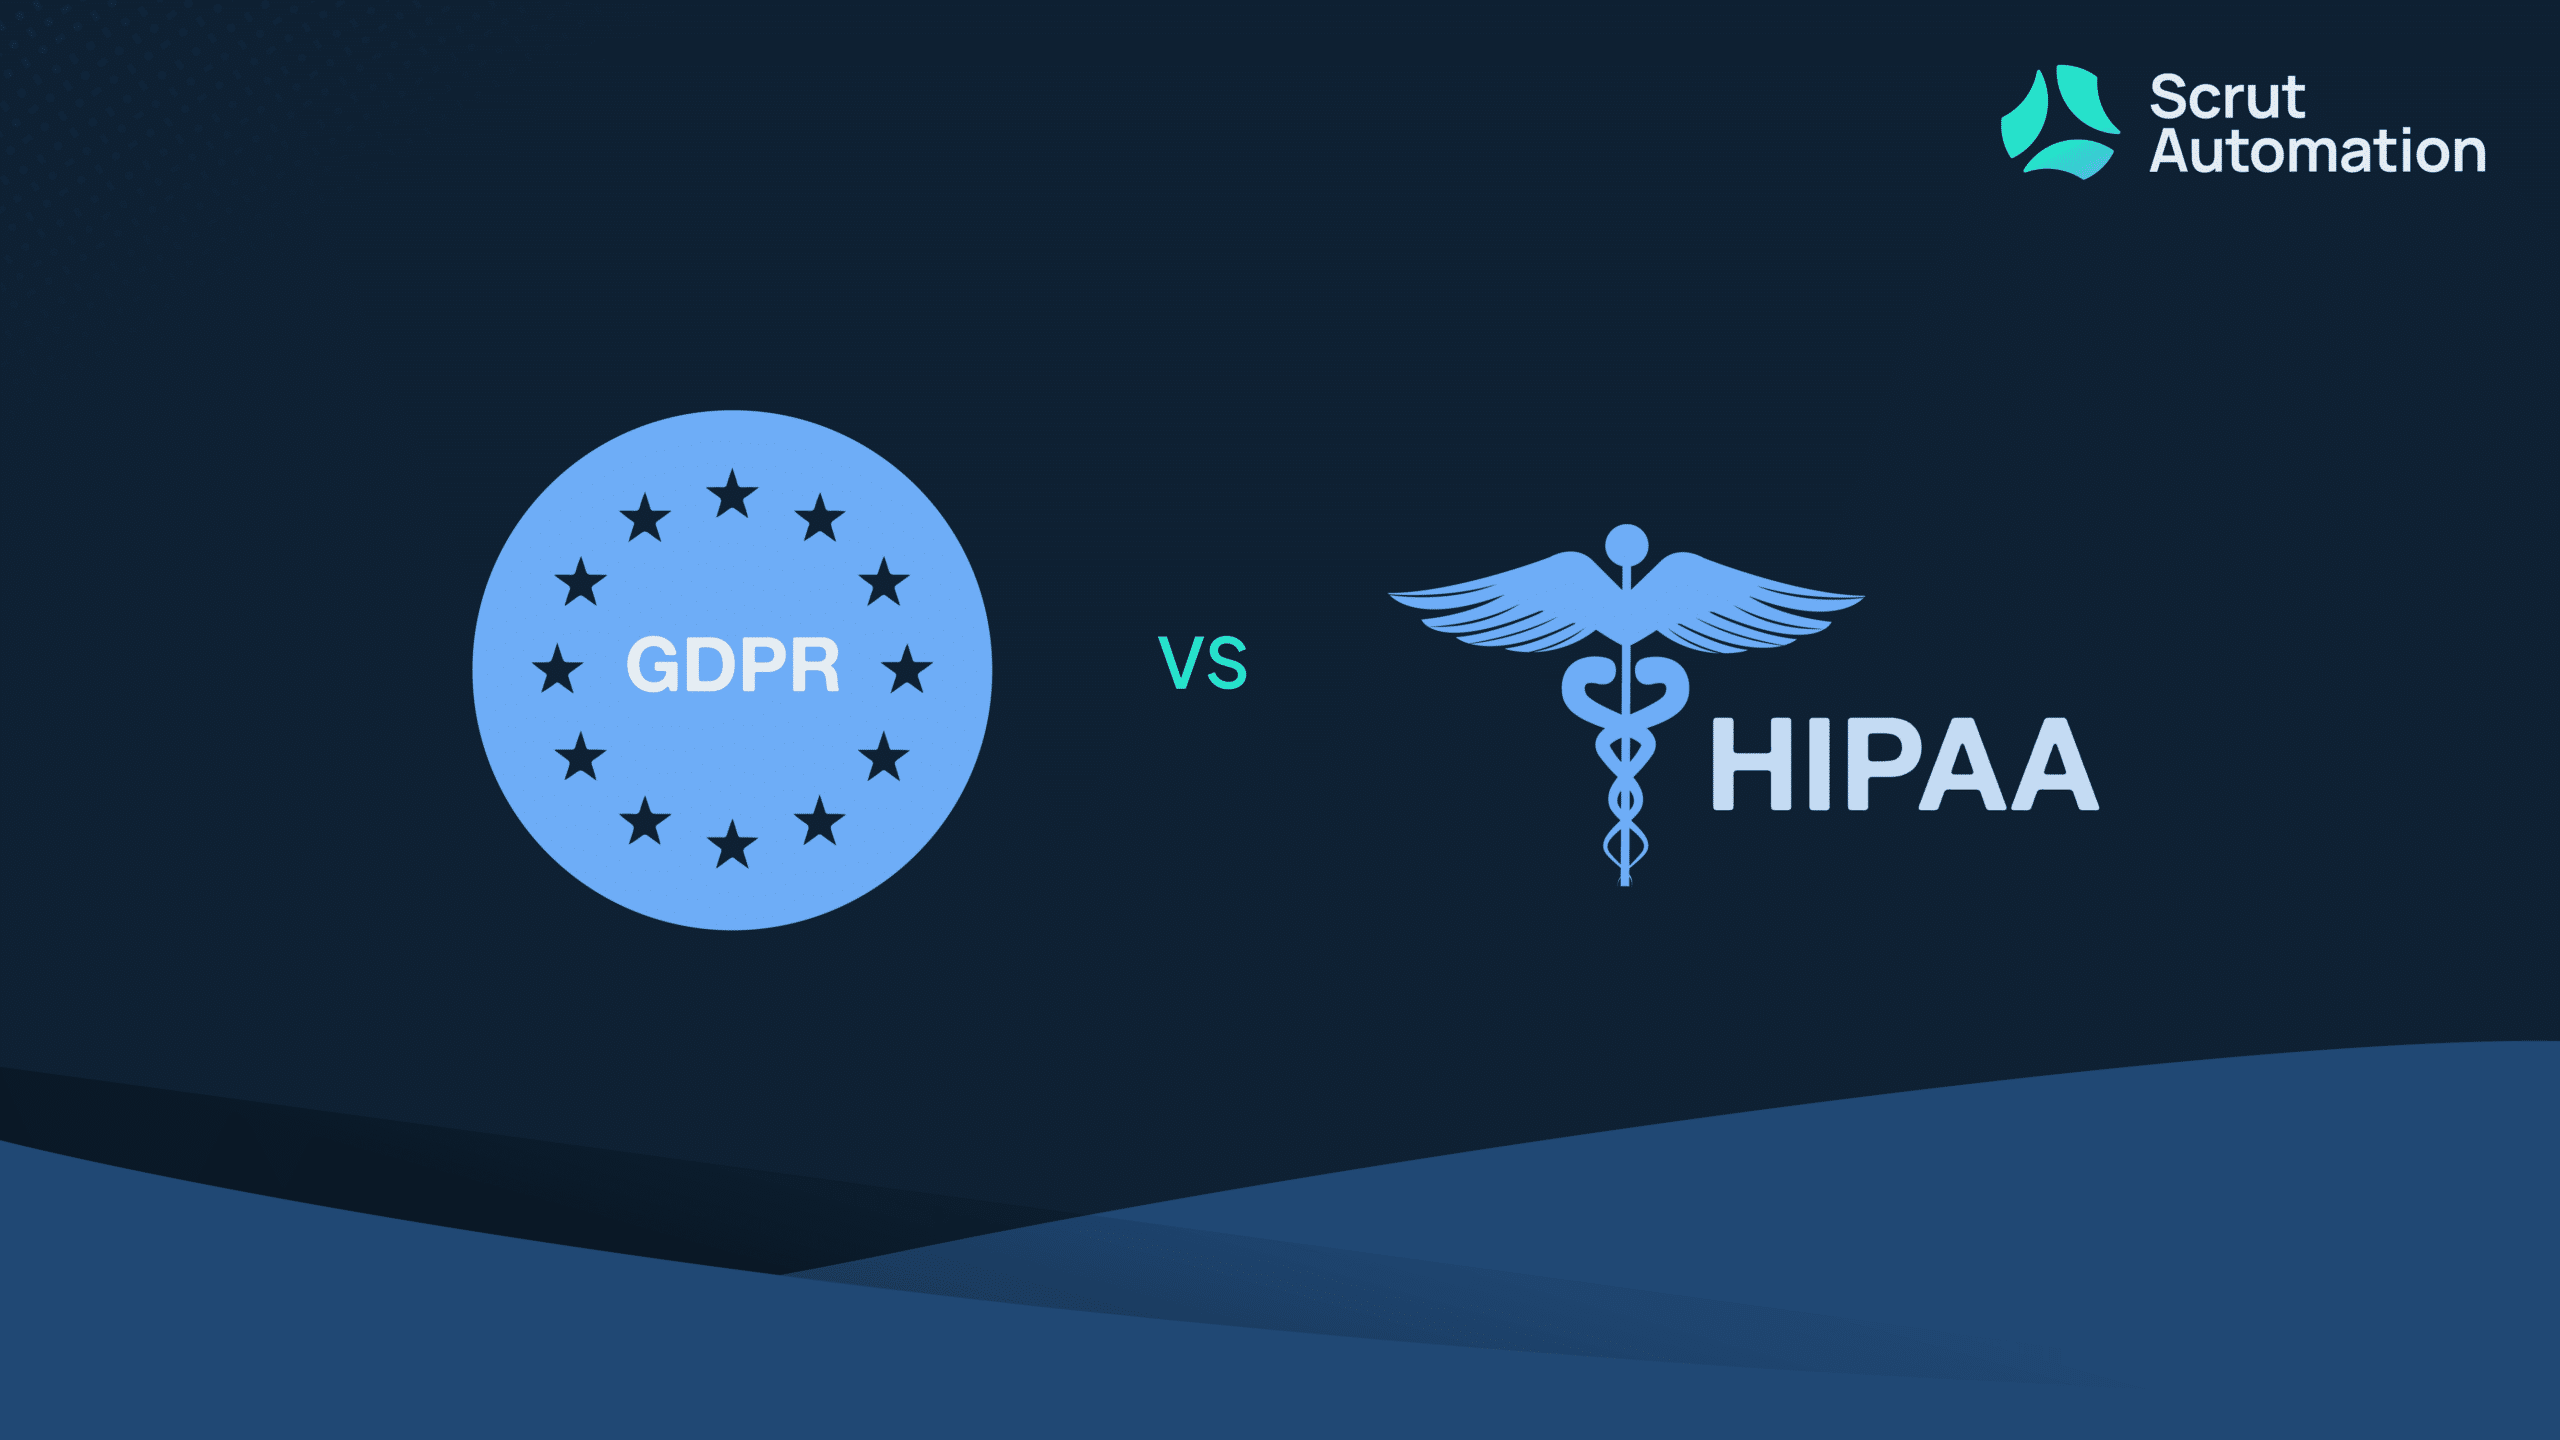 Visual representation of GDPR vs HIPAA compliance